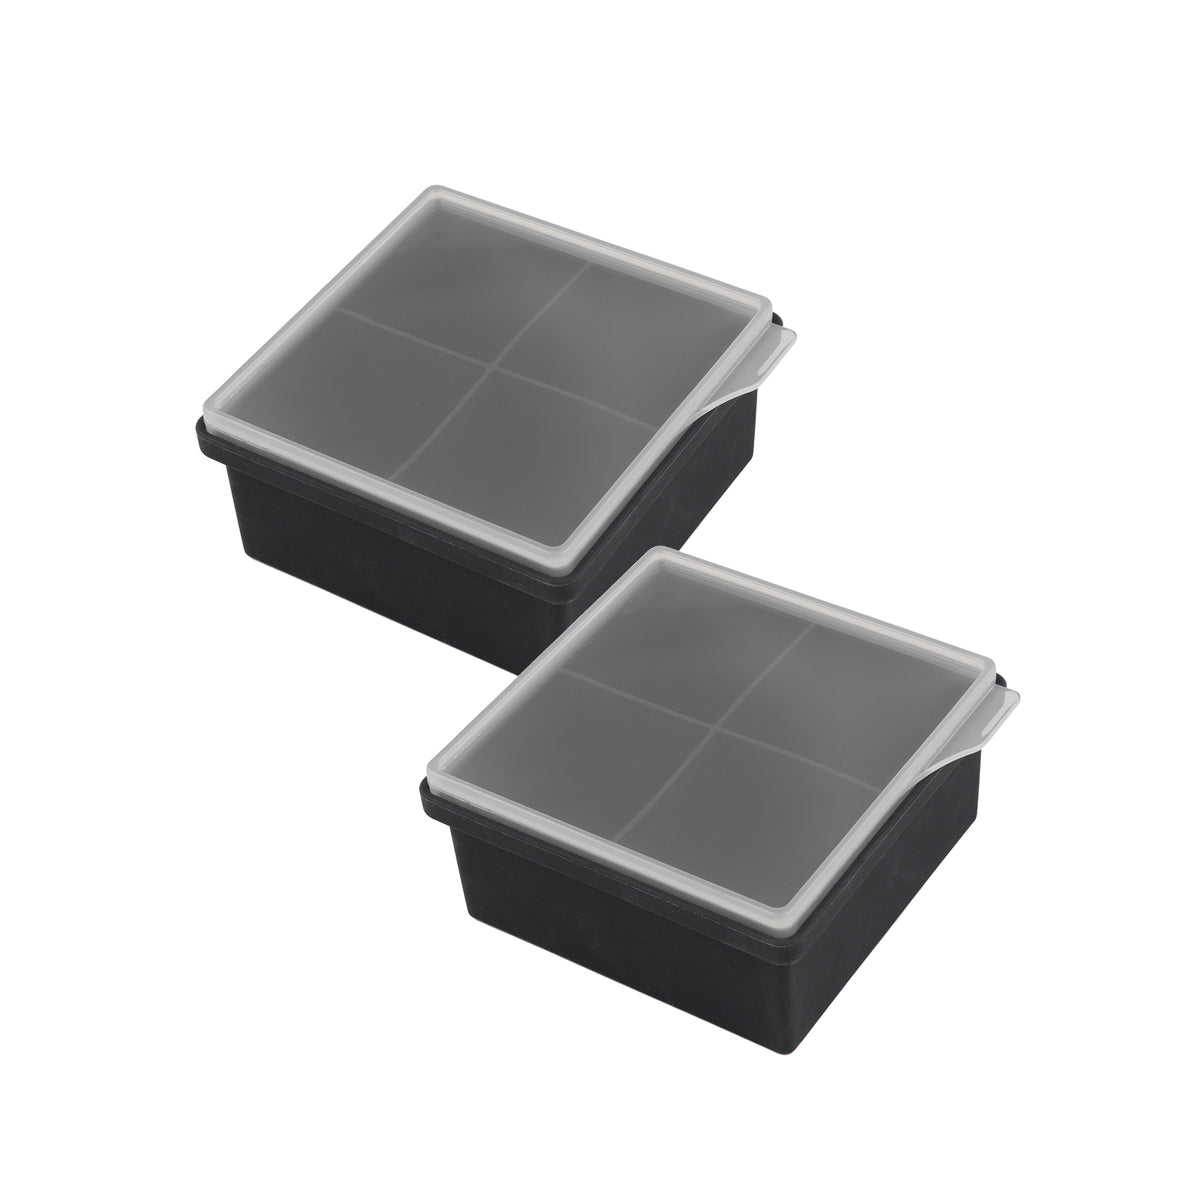 Cambridge 4-Cube Silicone Ice Mold, Set of 2 - Black